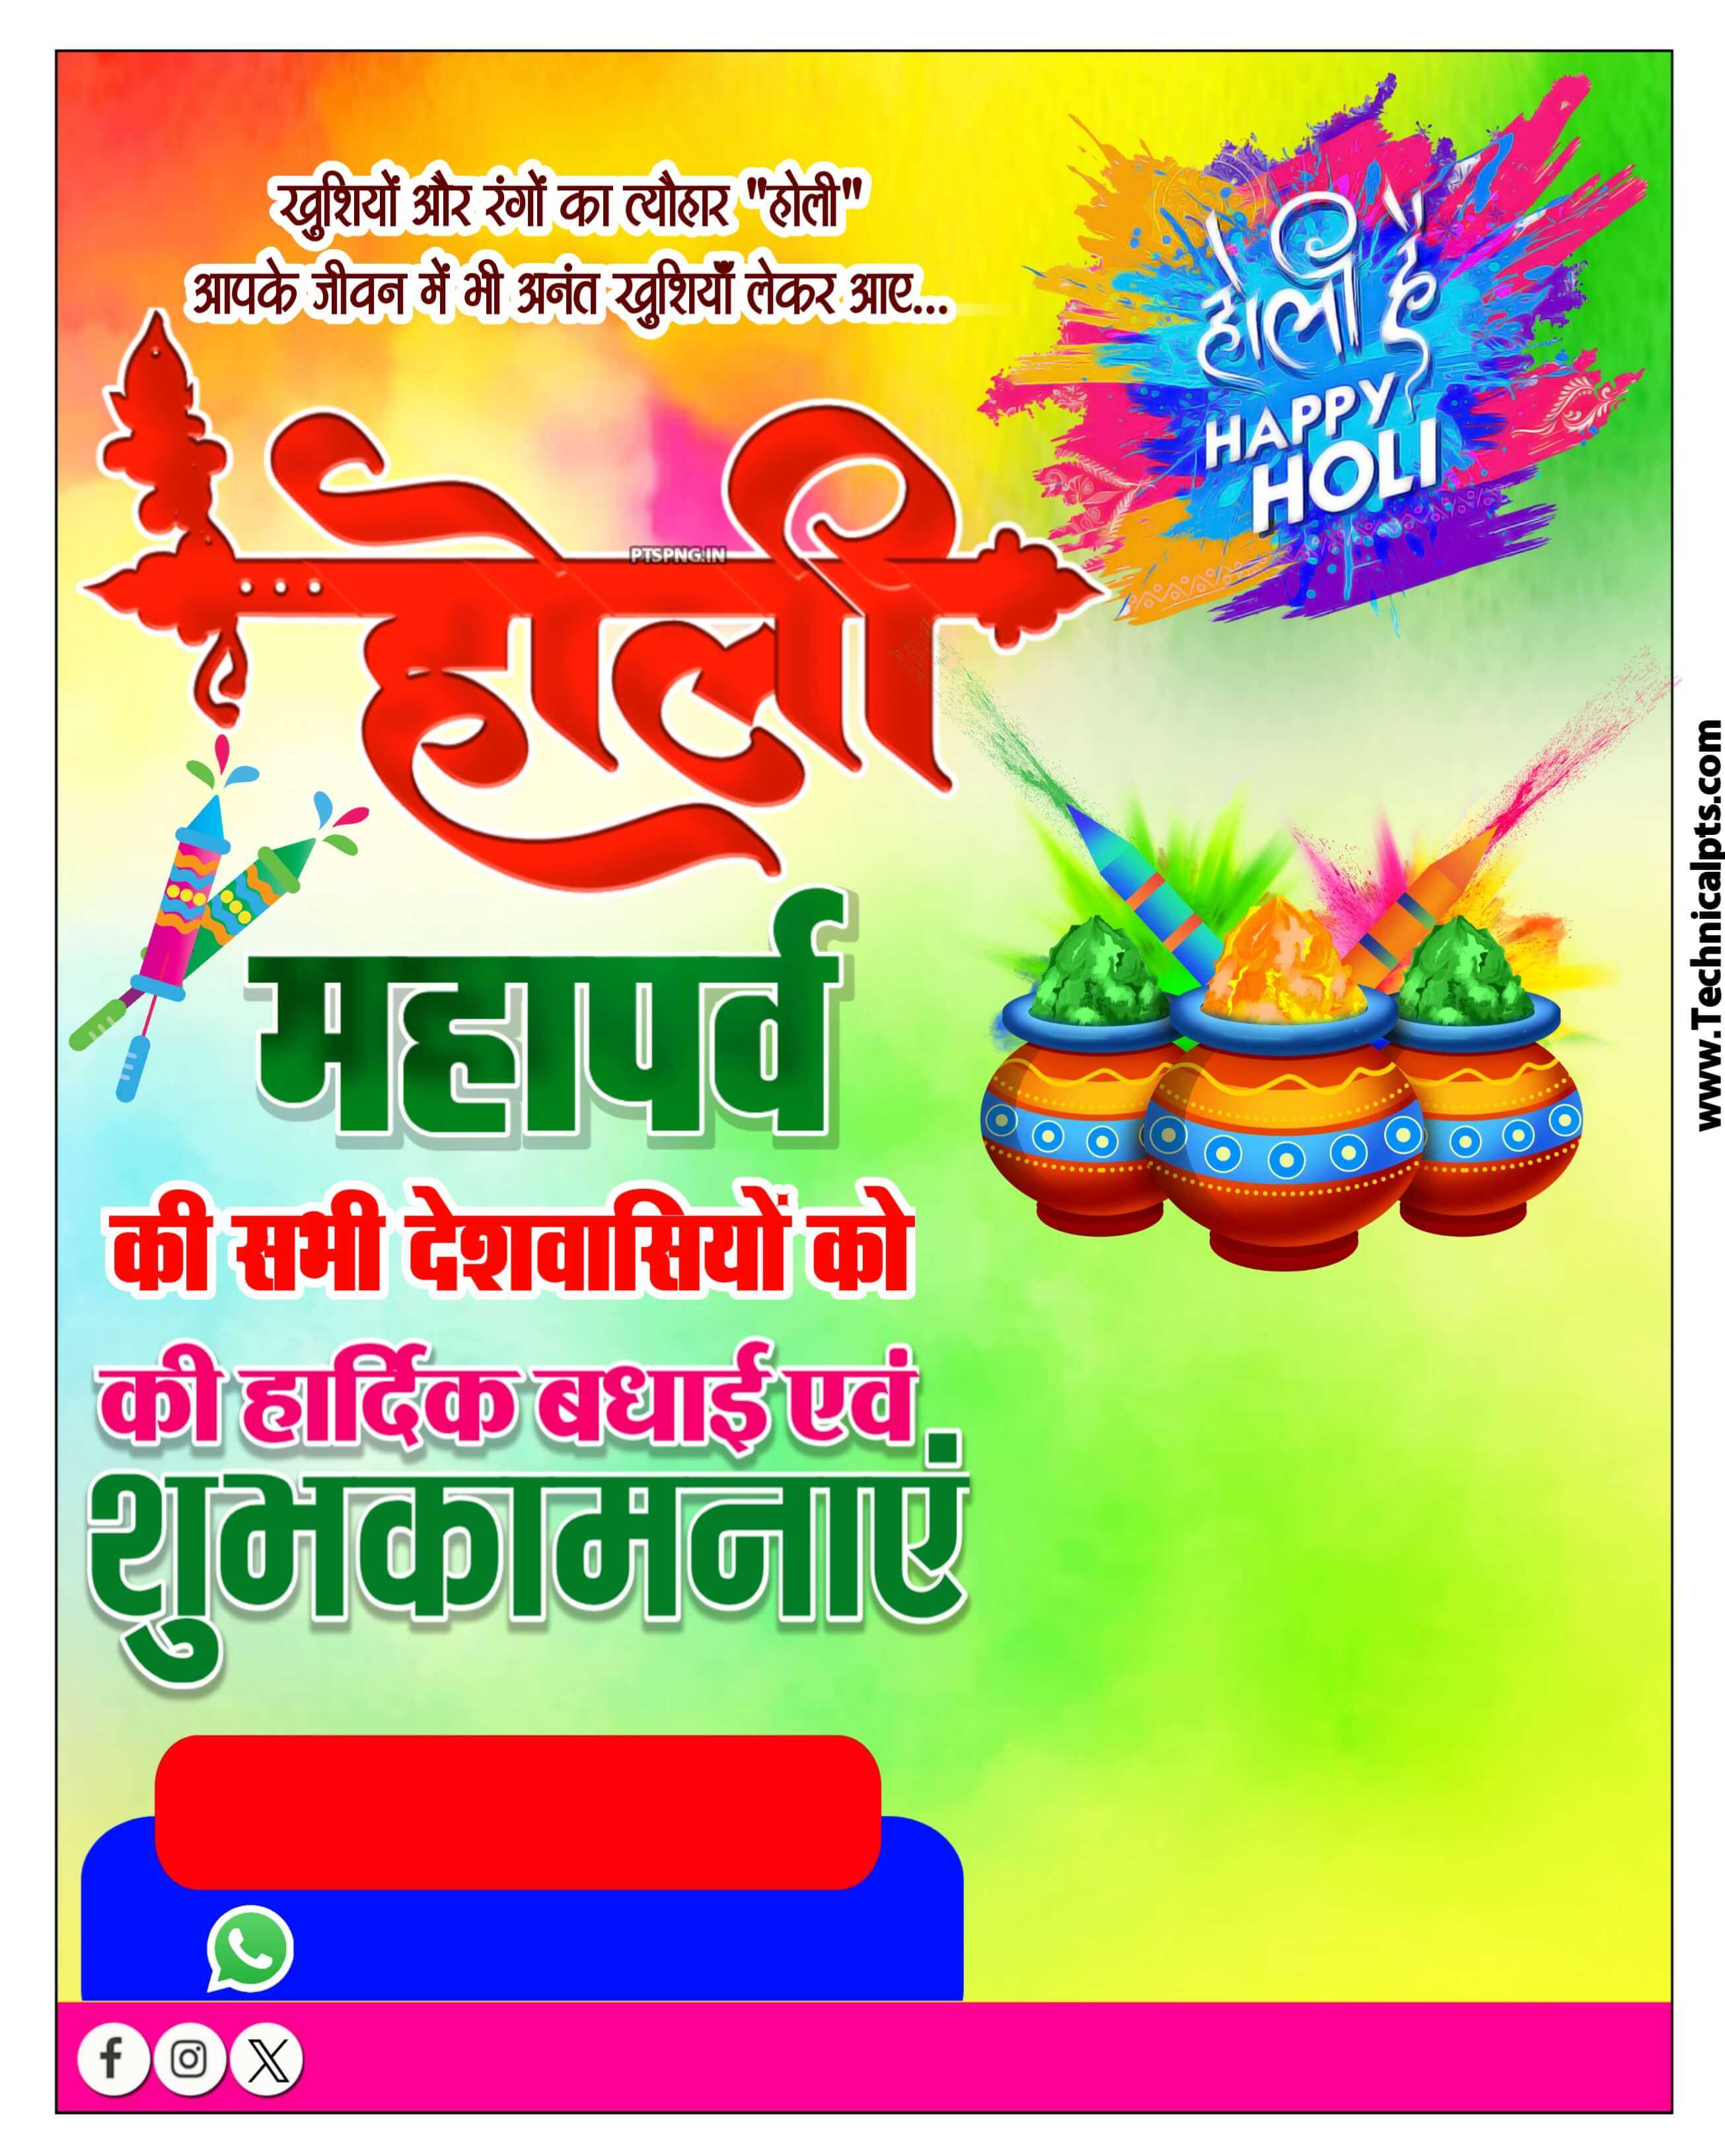 Happy Holi poster plp file free download| Holi ka poster banaen mobile se| Holi banner editing plp file download